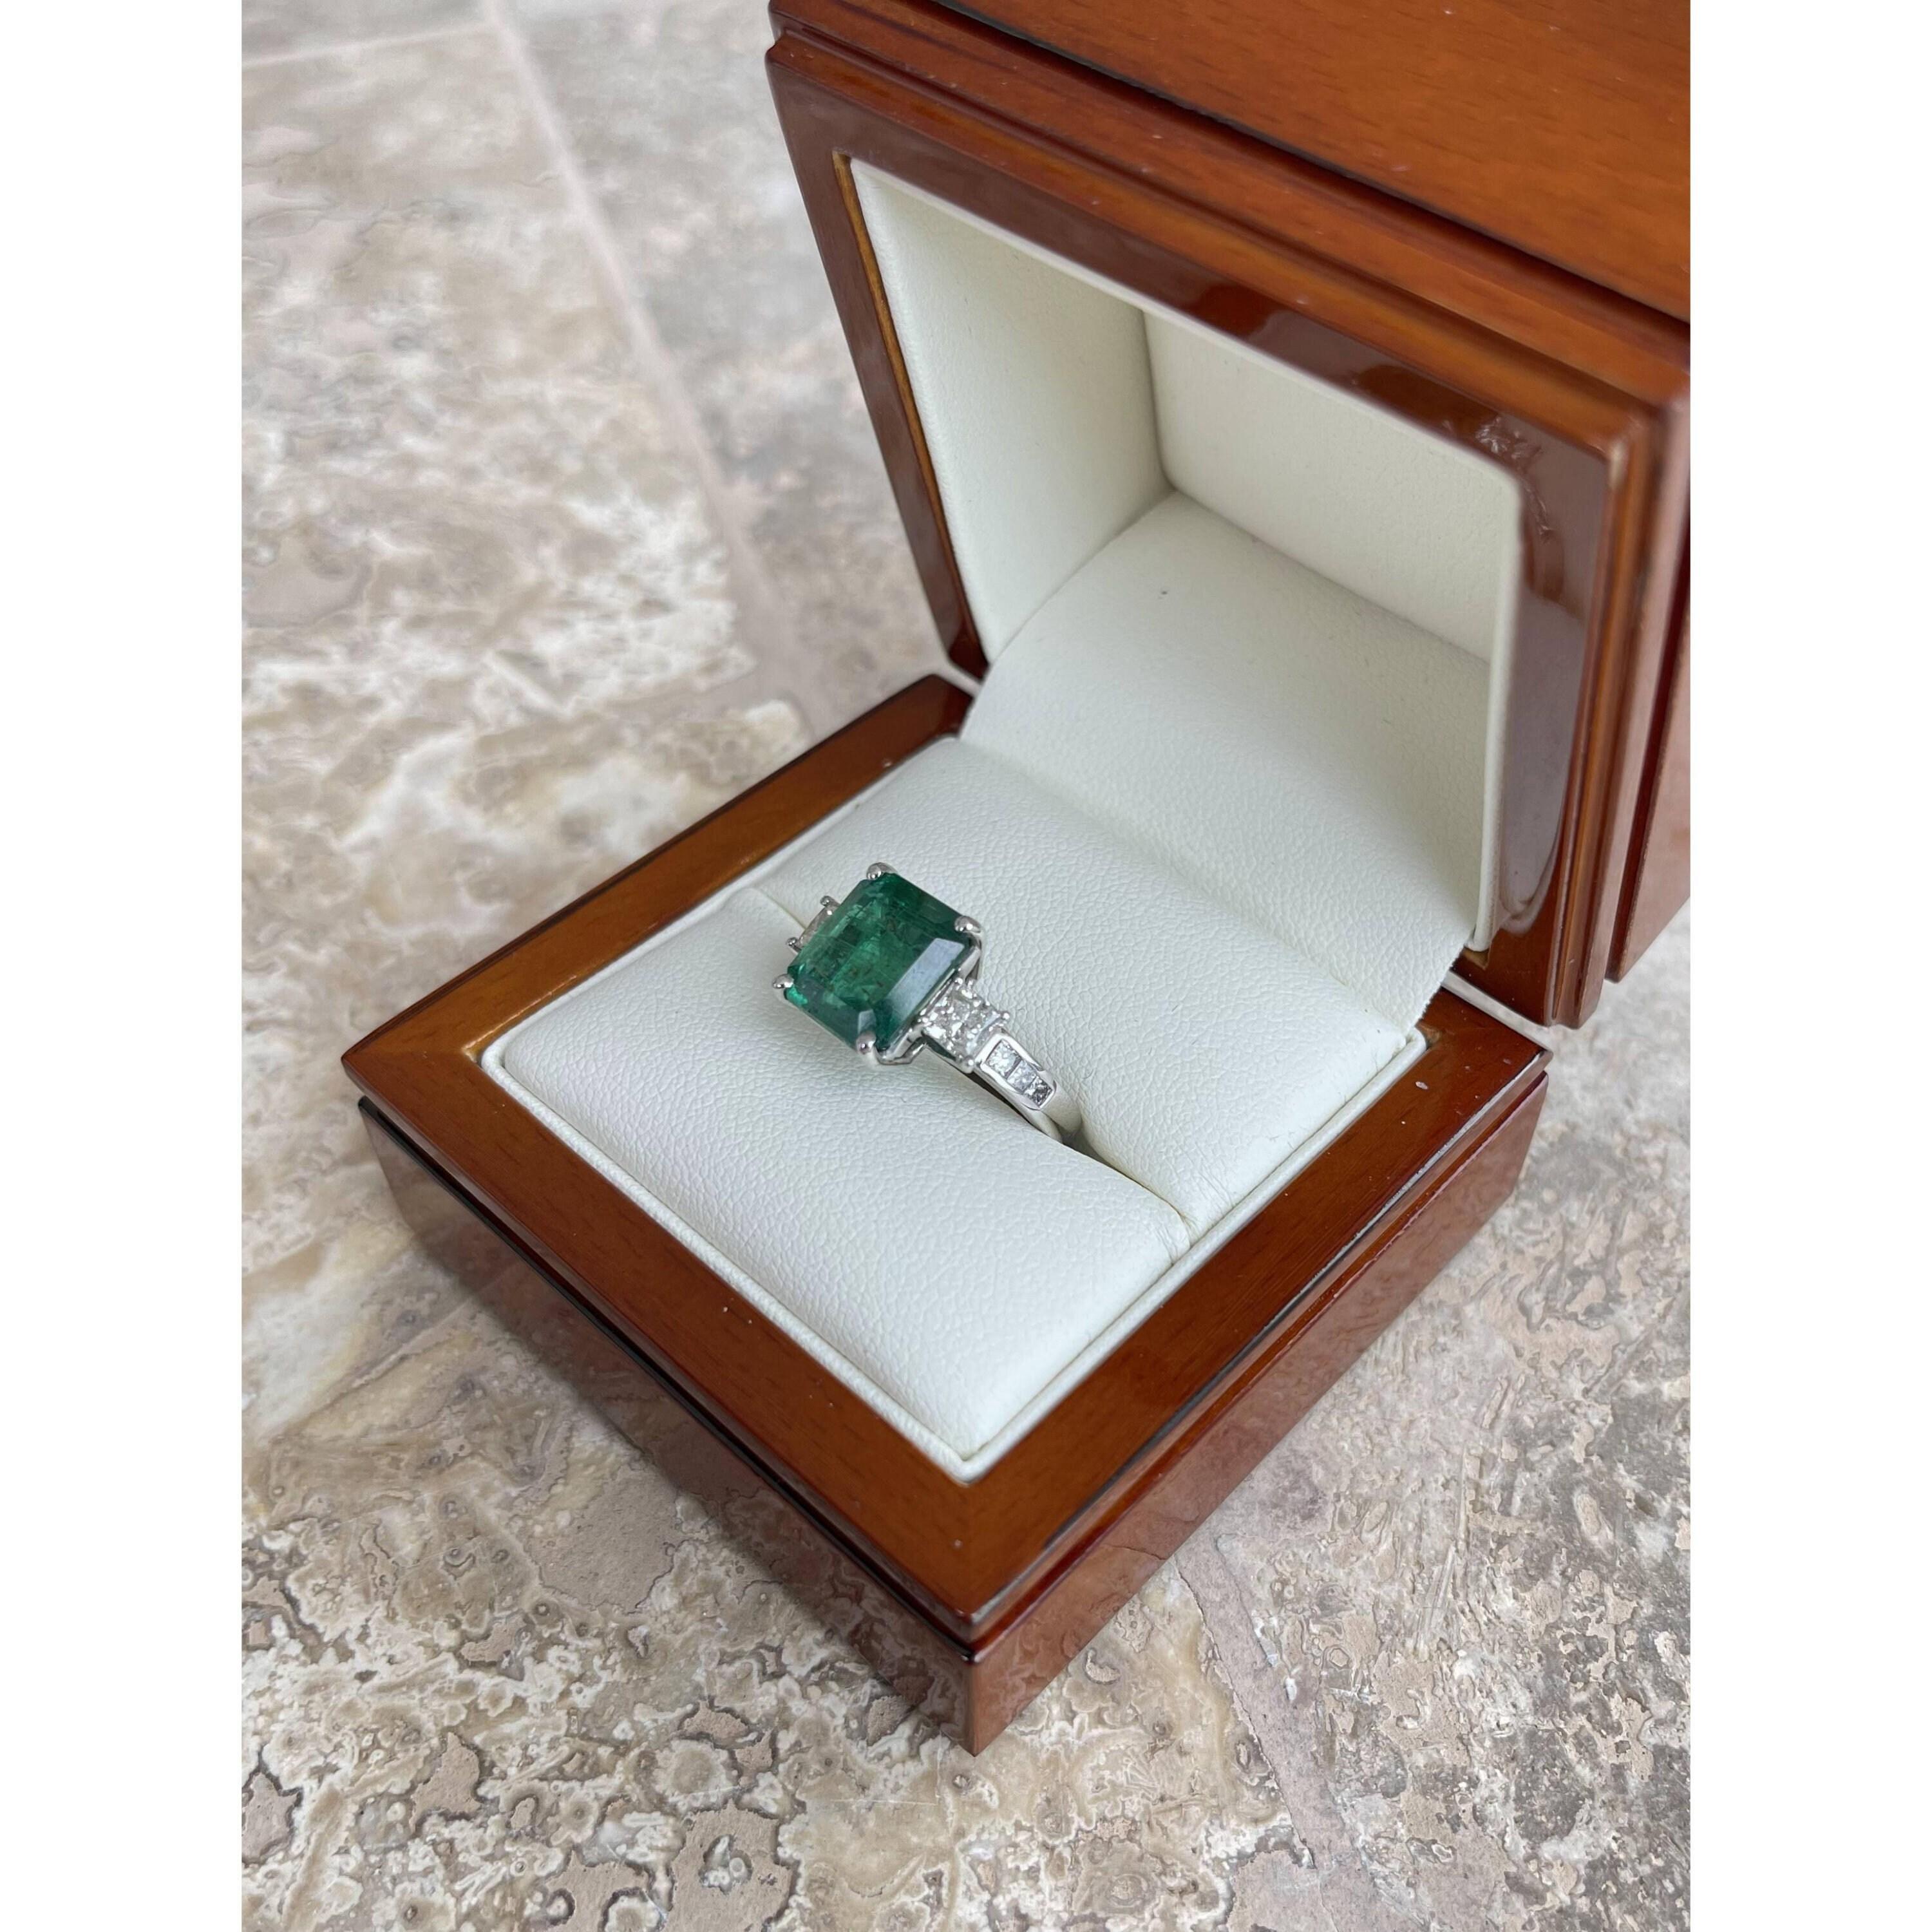 For Sale:  4 Carat Emerald Cut Emerald Diamond Engagement Ring, Halo Diamond 18K Gold Ring 6